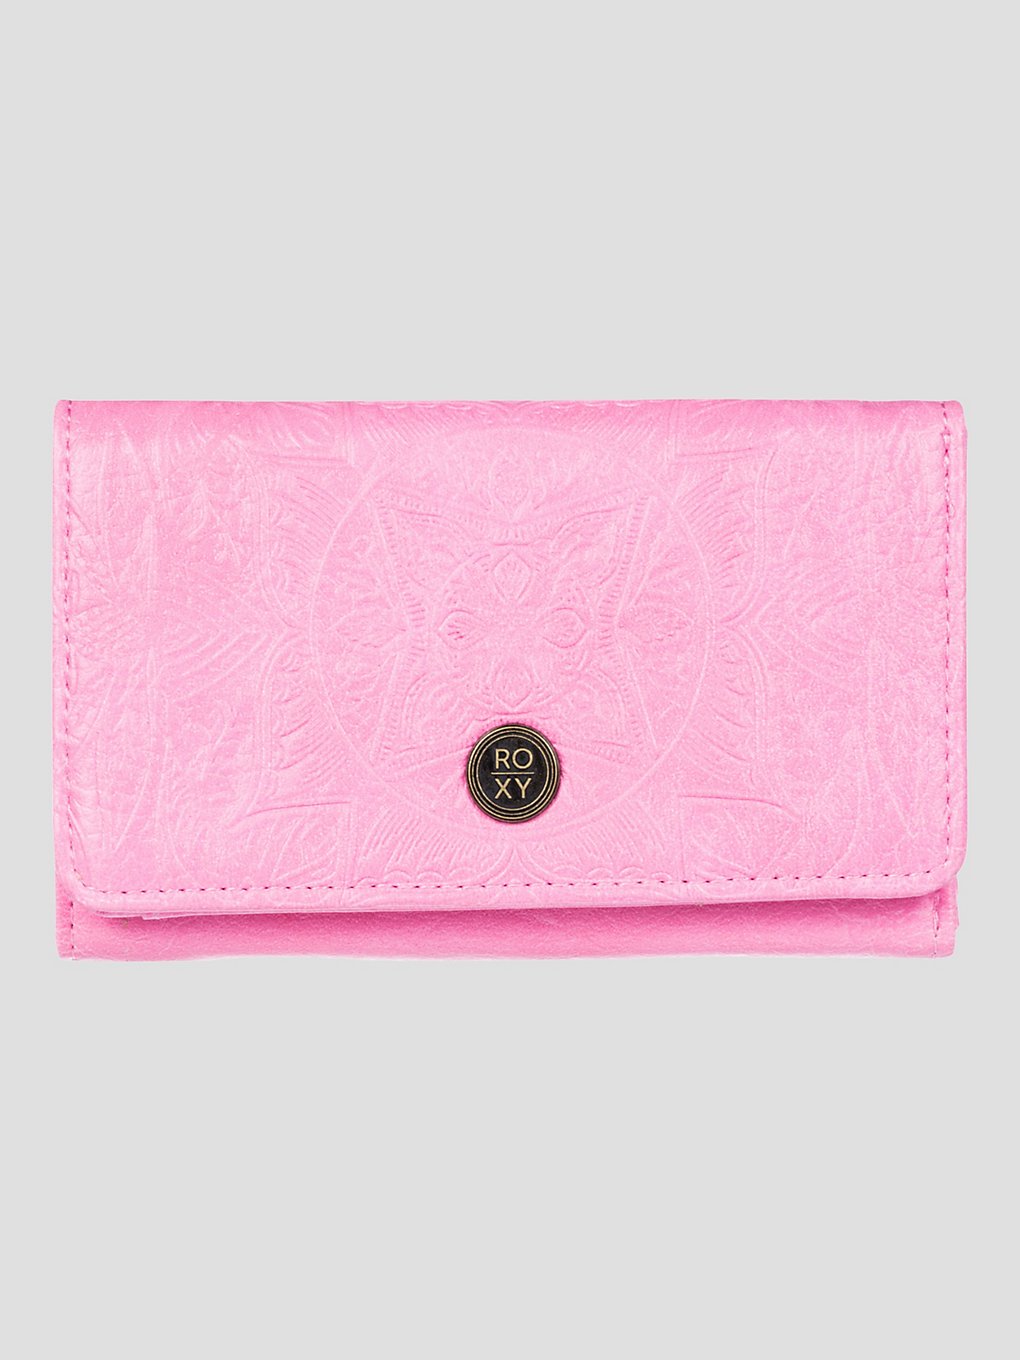 Roxy Crazy Diamond Geldbörse sachet pink kaufen